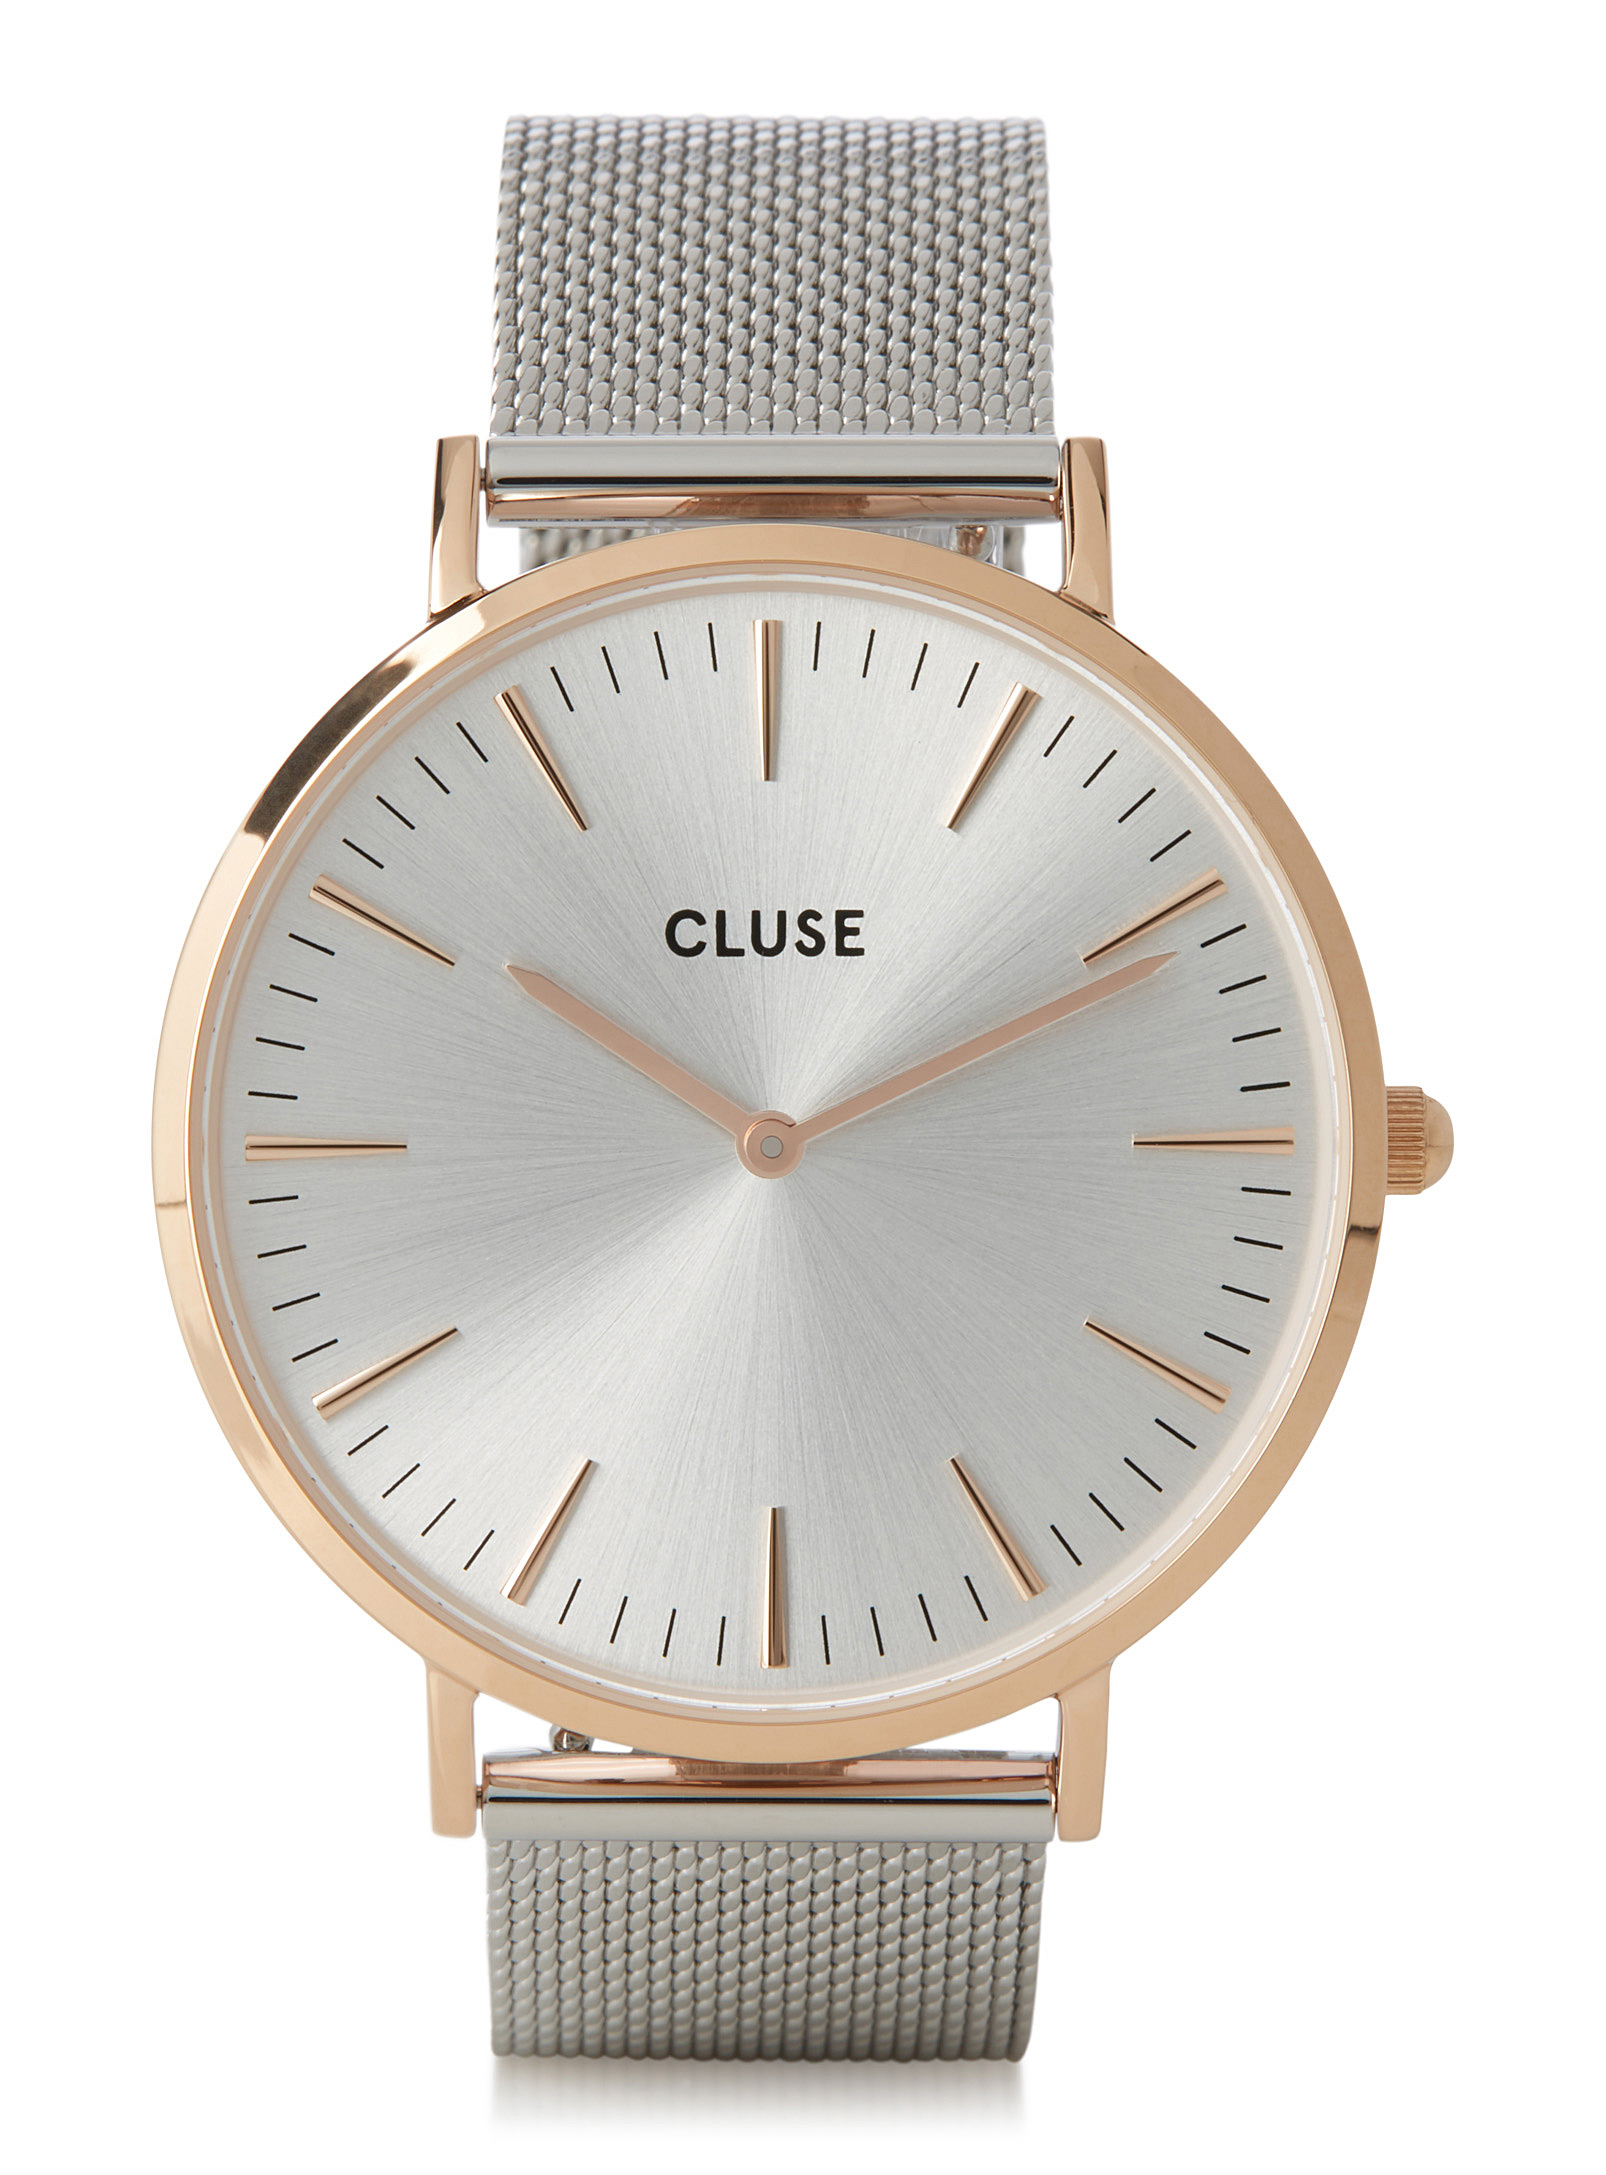 Cluse - Women's Boho Chic two-tone watch